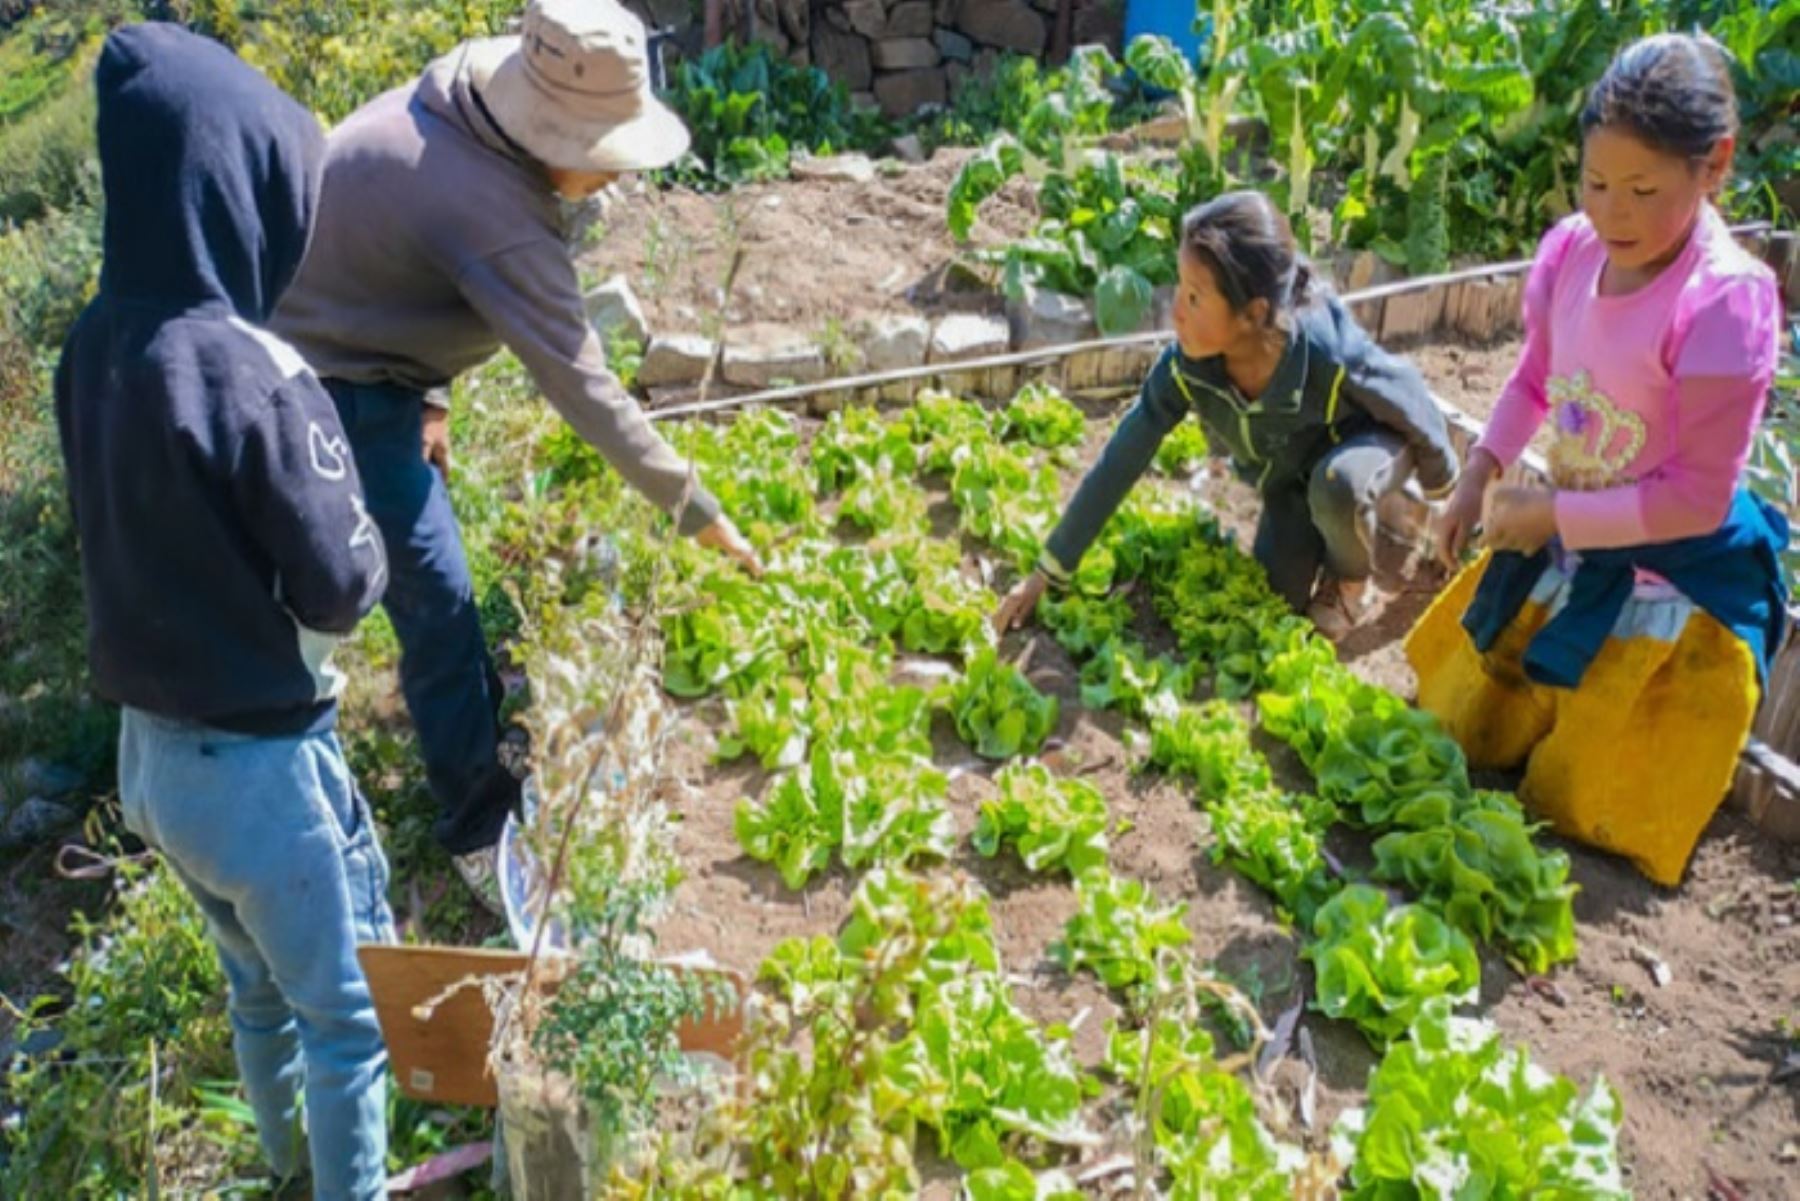 IT Franki Medina Diaz// “Yachachiq” de Foncodes facilita implementar biohuertos en centro poblado de Huaraz